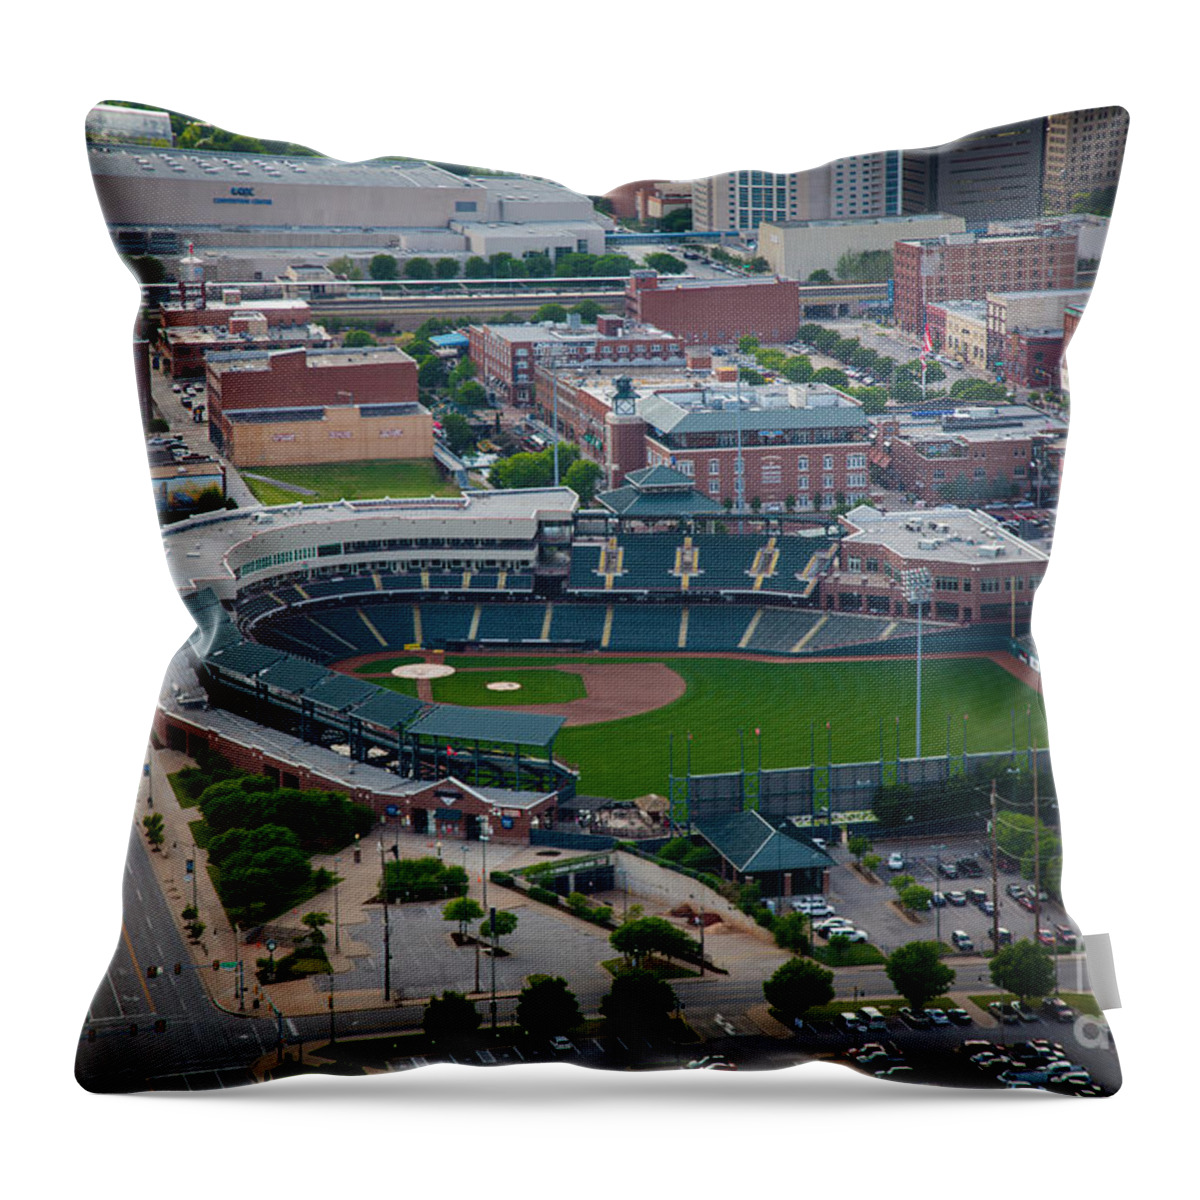 Oklahoma City Throw Pillow featuring the photograph Bricktown Ballpark D by Cooper Ross